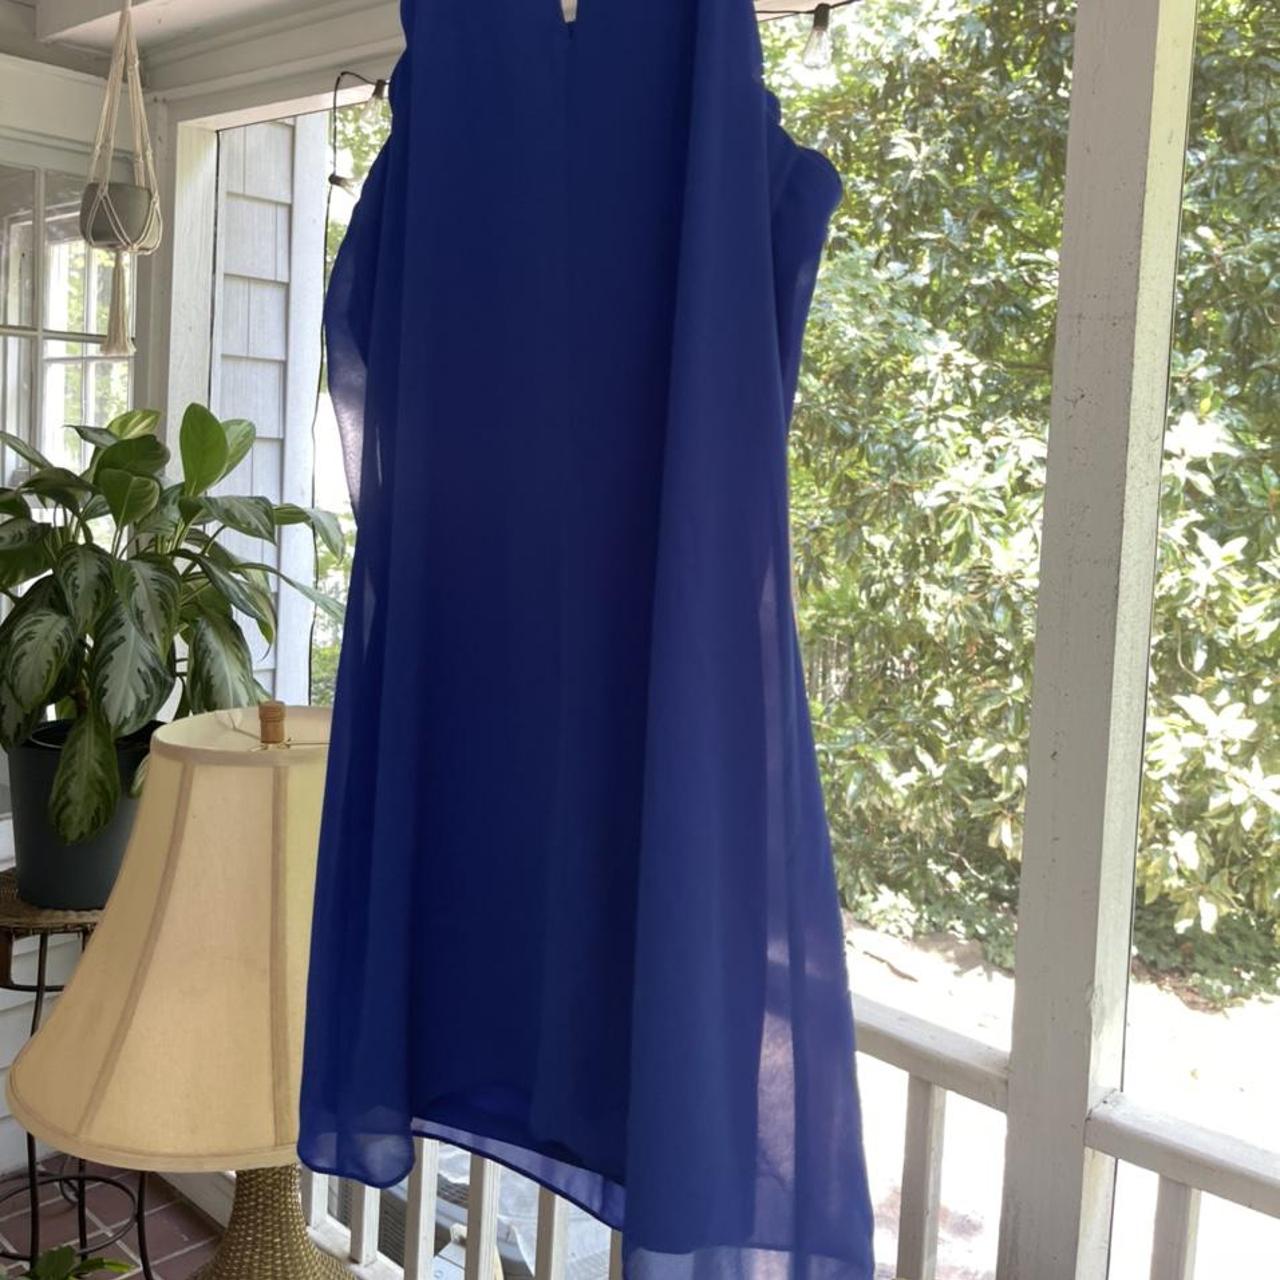 17London Women's Navy and Blue Dress (4)